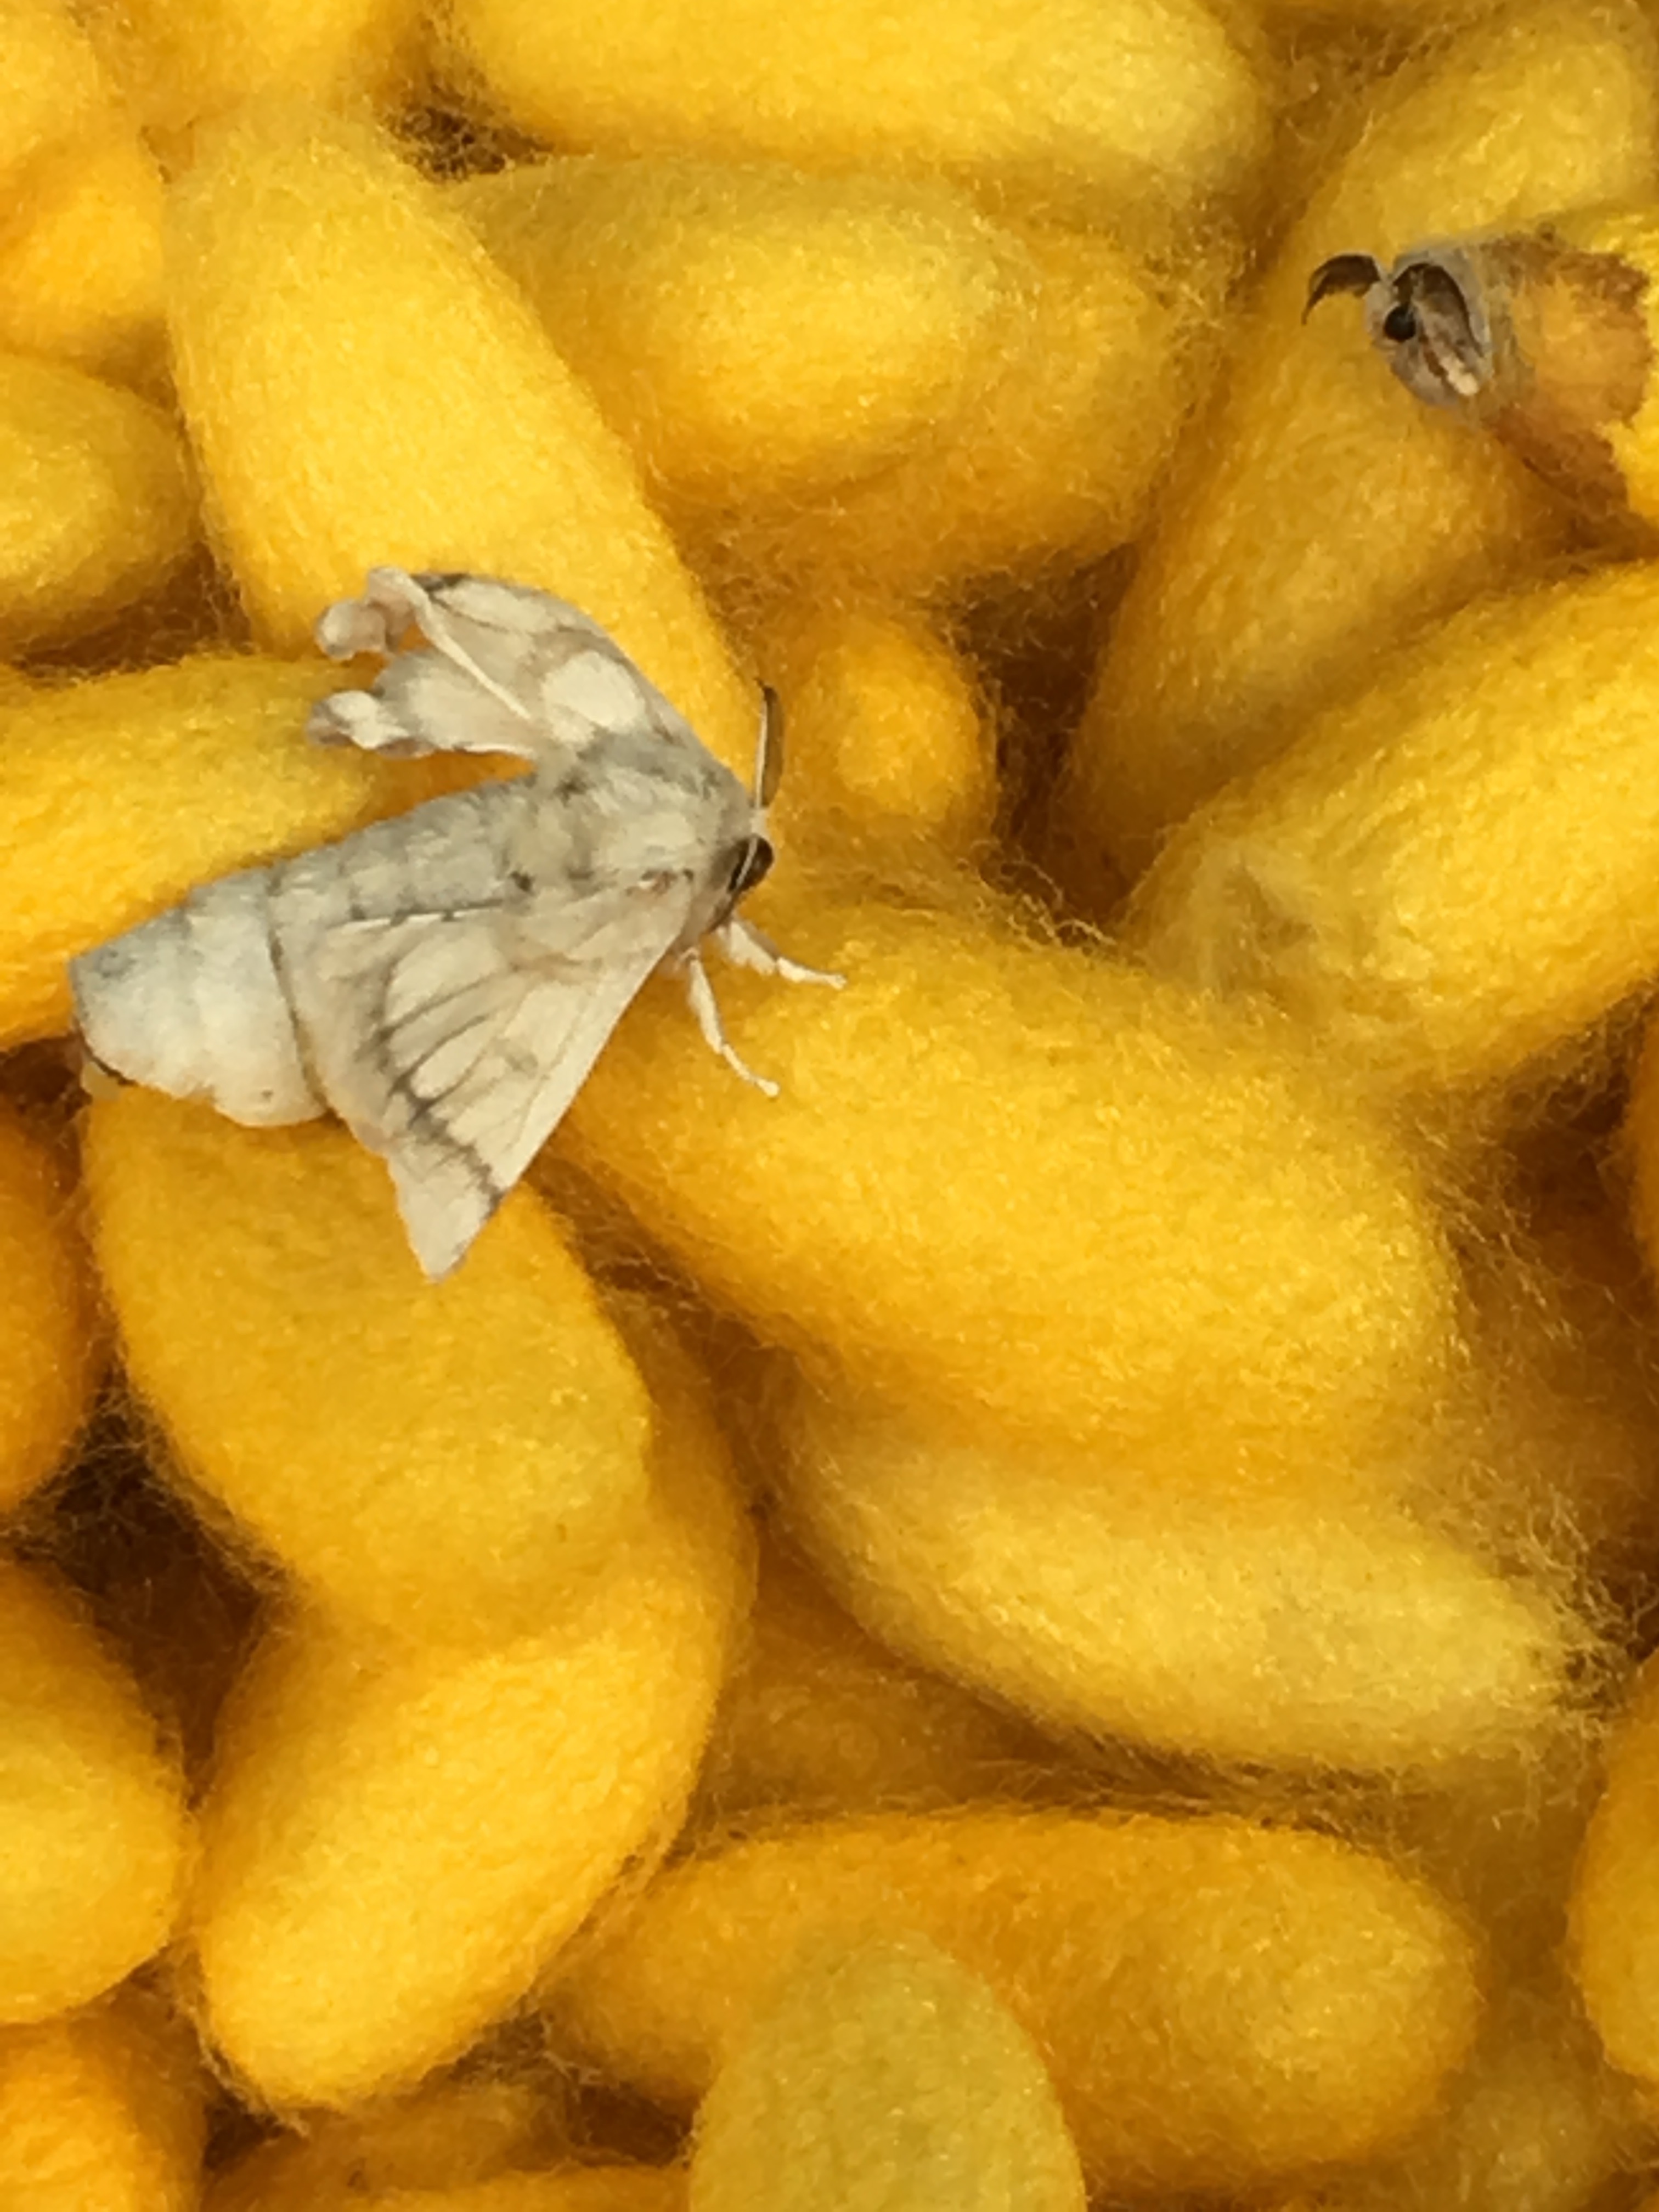 silk moth hatching.jpg